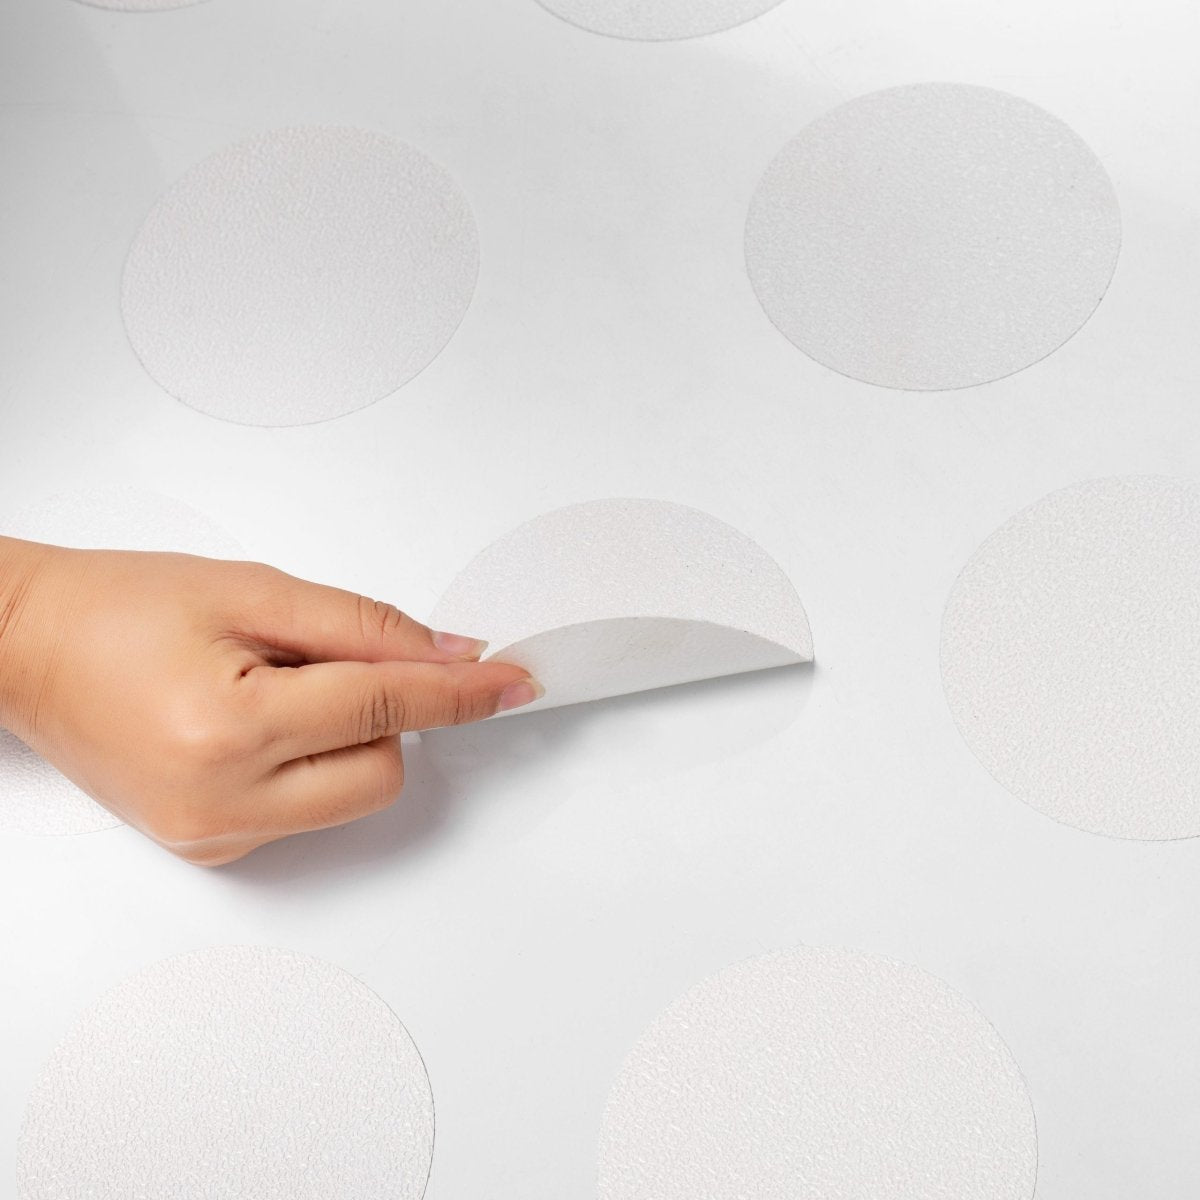 Non Slip Bath & Shower Stickers – 10x Large White Discs - Slips Away - SA006 -